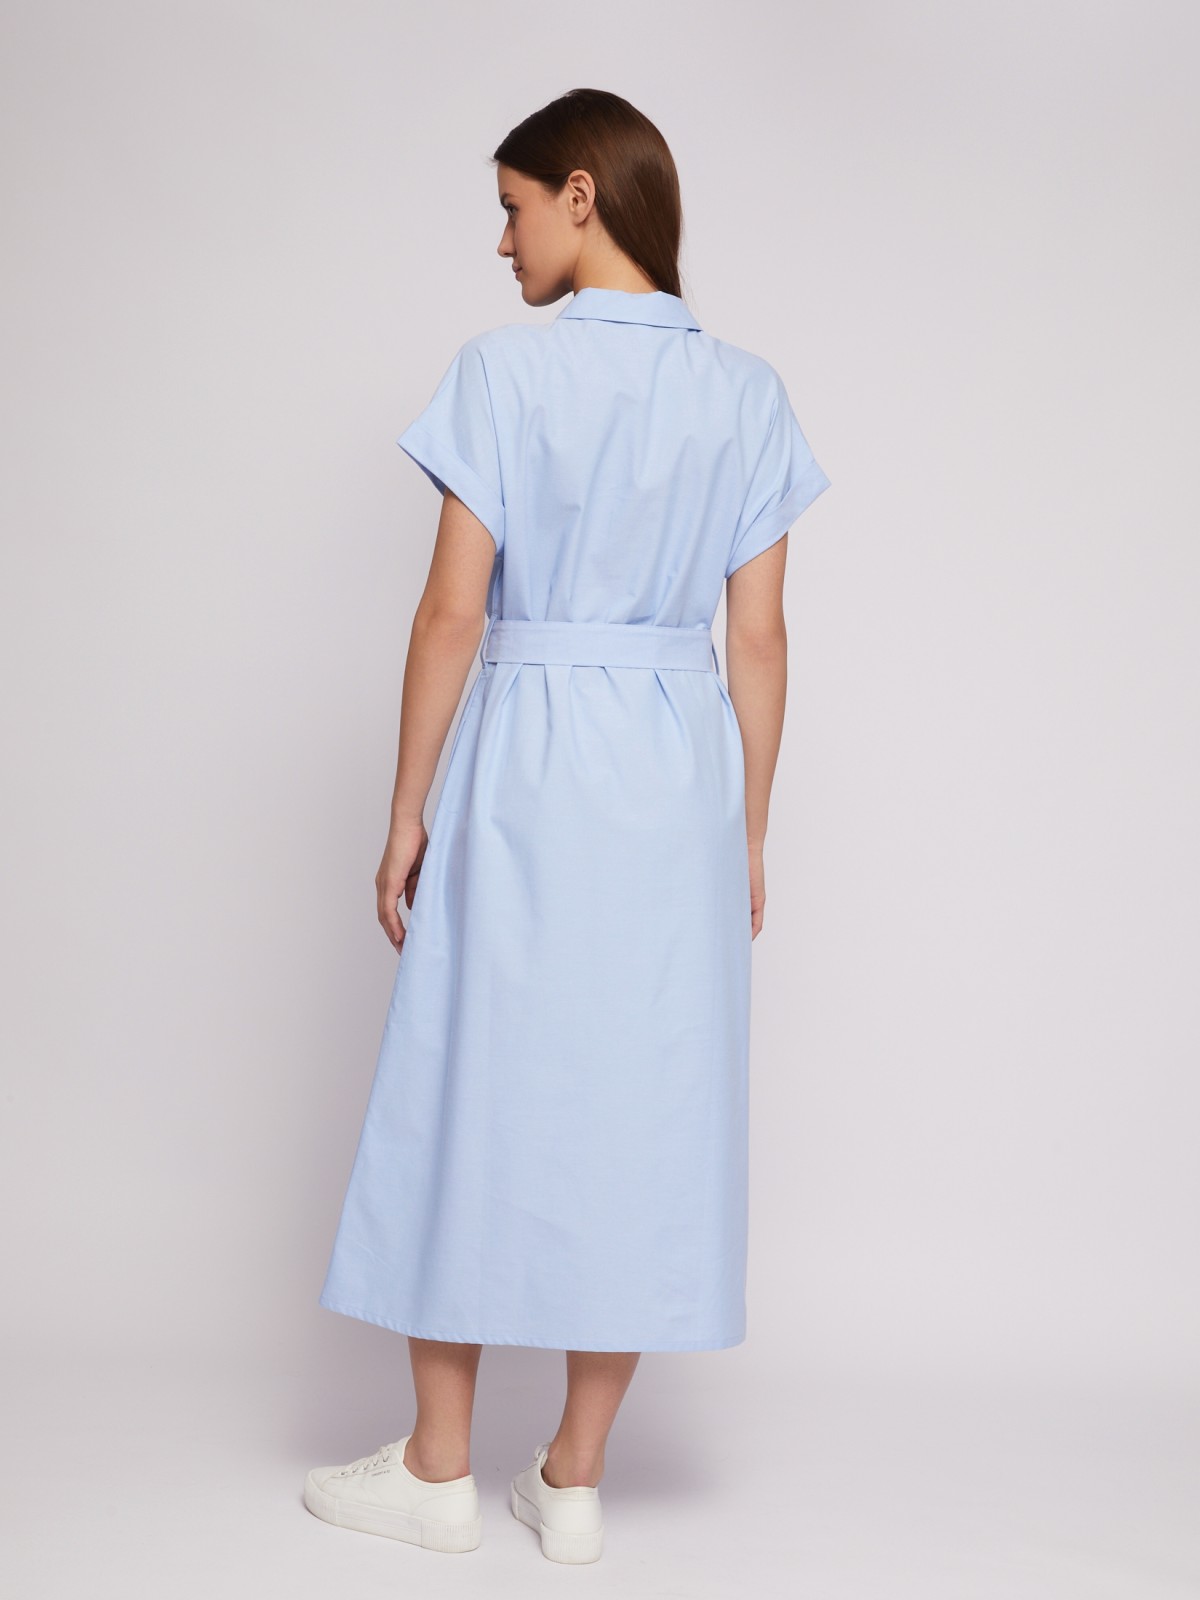 Платье-рубашка из хлопка с коротким рукавом и поясом zolla 024218262353, цвет светло-голубой, размер XS - фото 6